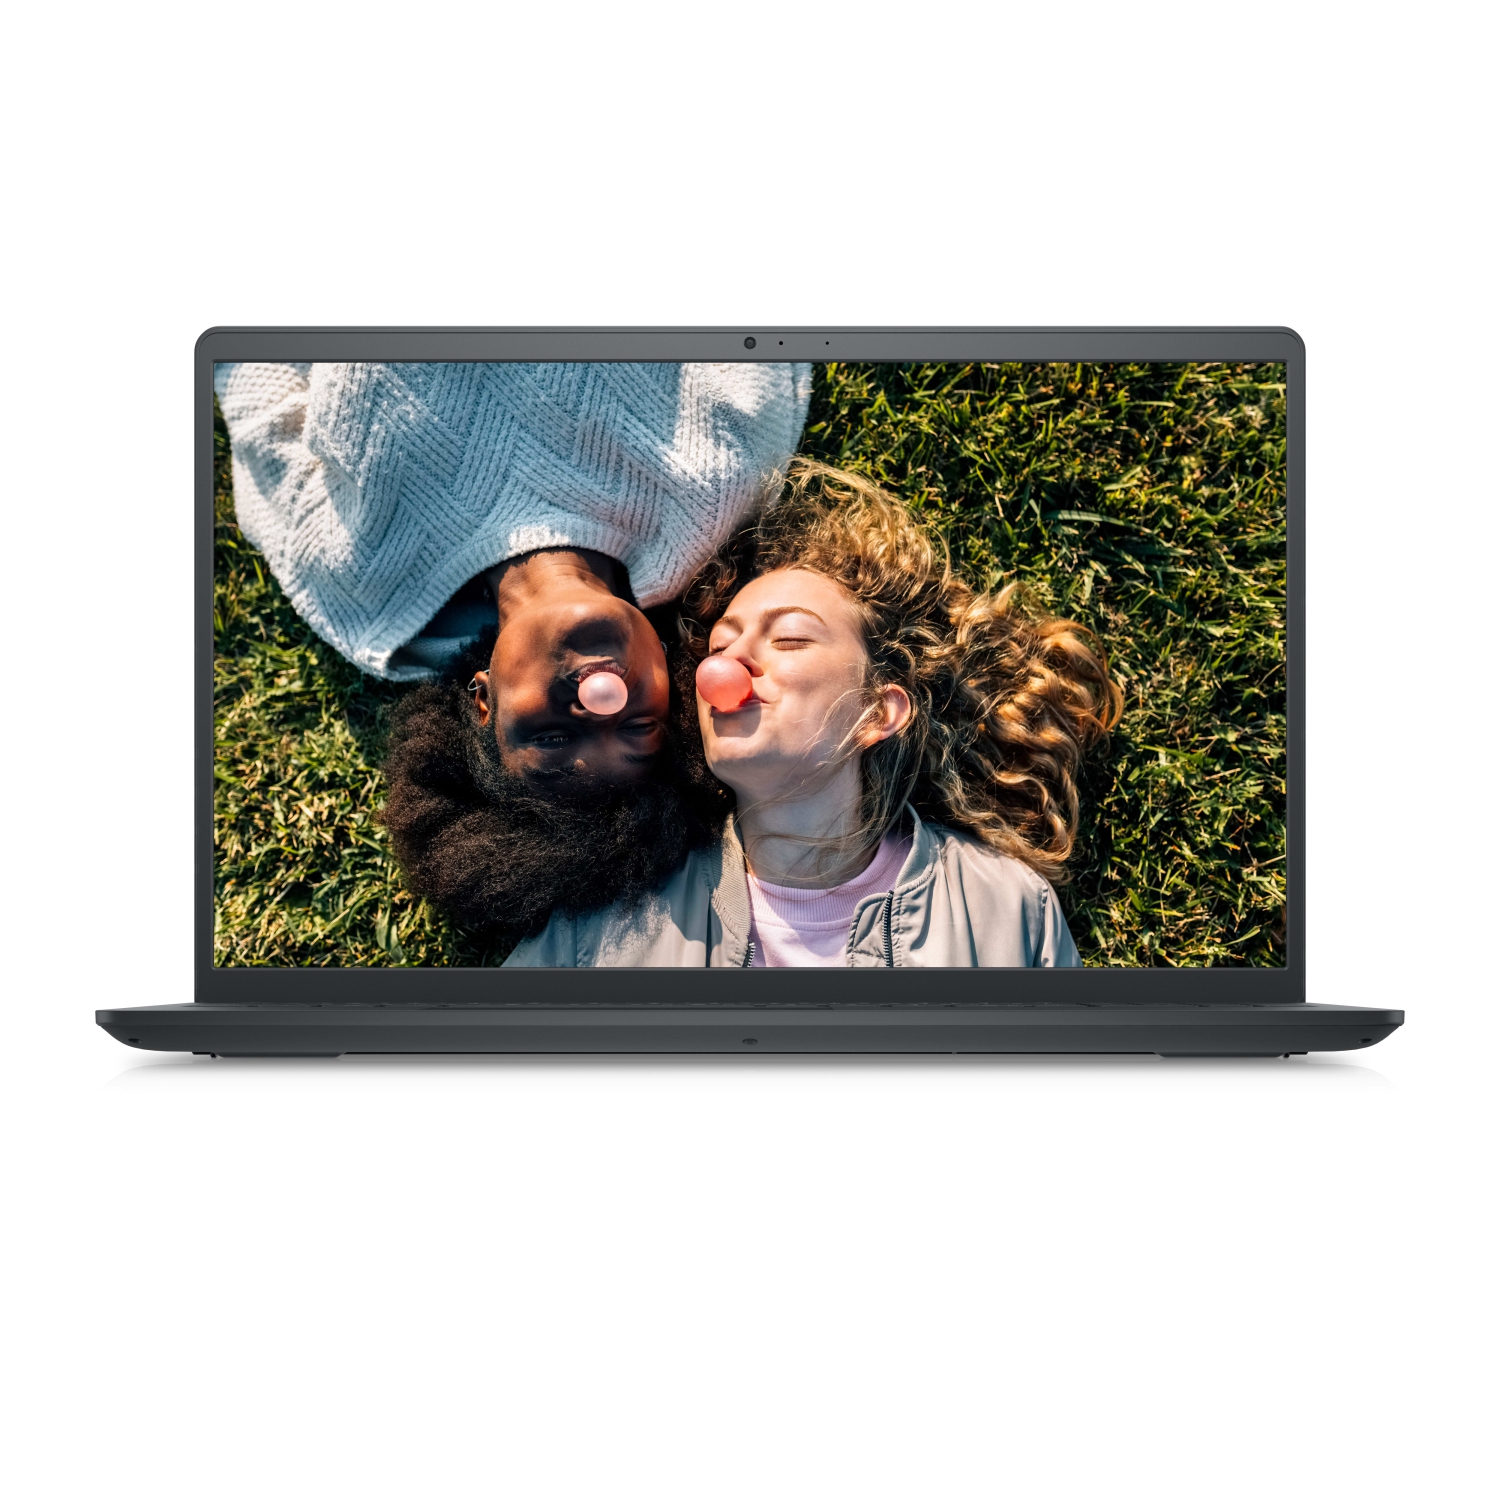 Dell Inspiron 3511 Laptop (2021) | 15.6" FHD | Core i7 - 512GB SSD - 8GB RAM | 4 Cores @ 4.7 GHz - 11th Gen CPU